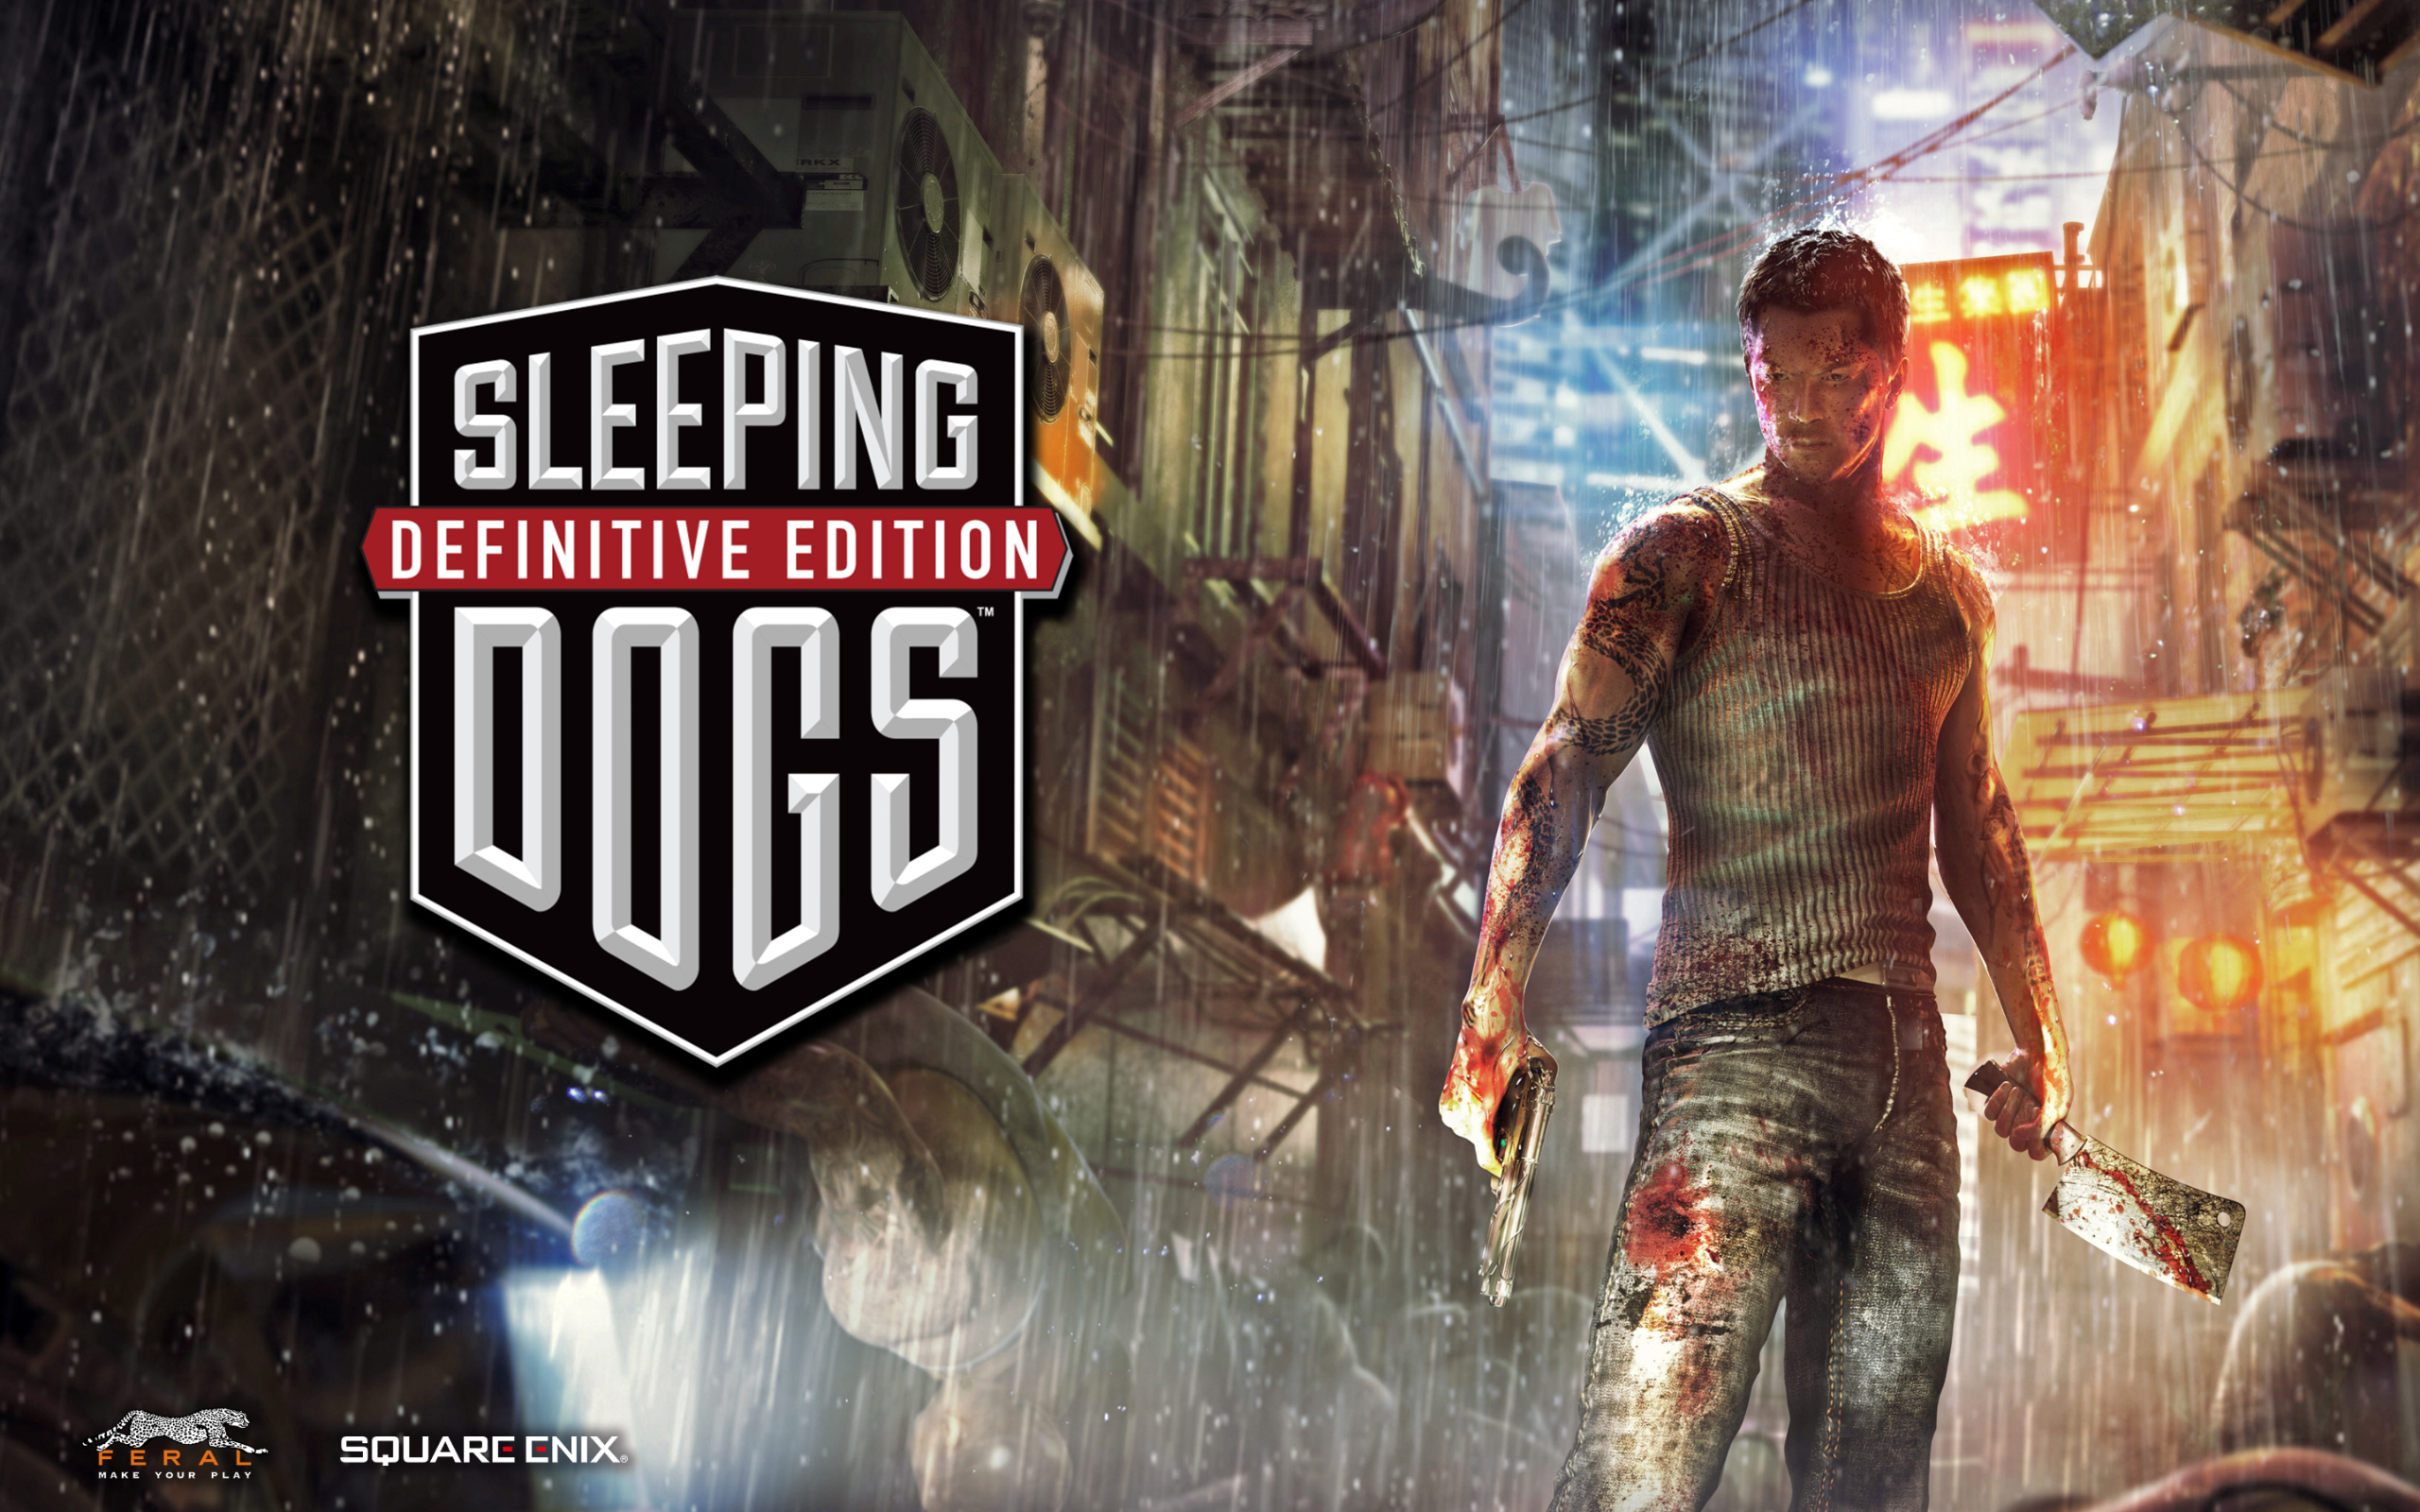 Buy Sleeping Dogs™ Definitive Edition